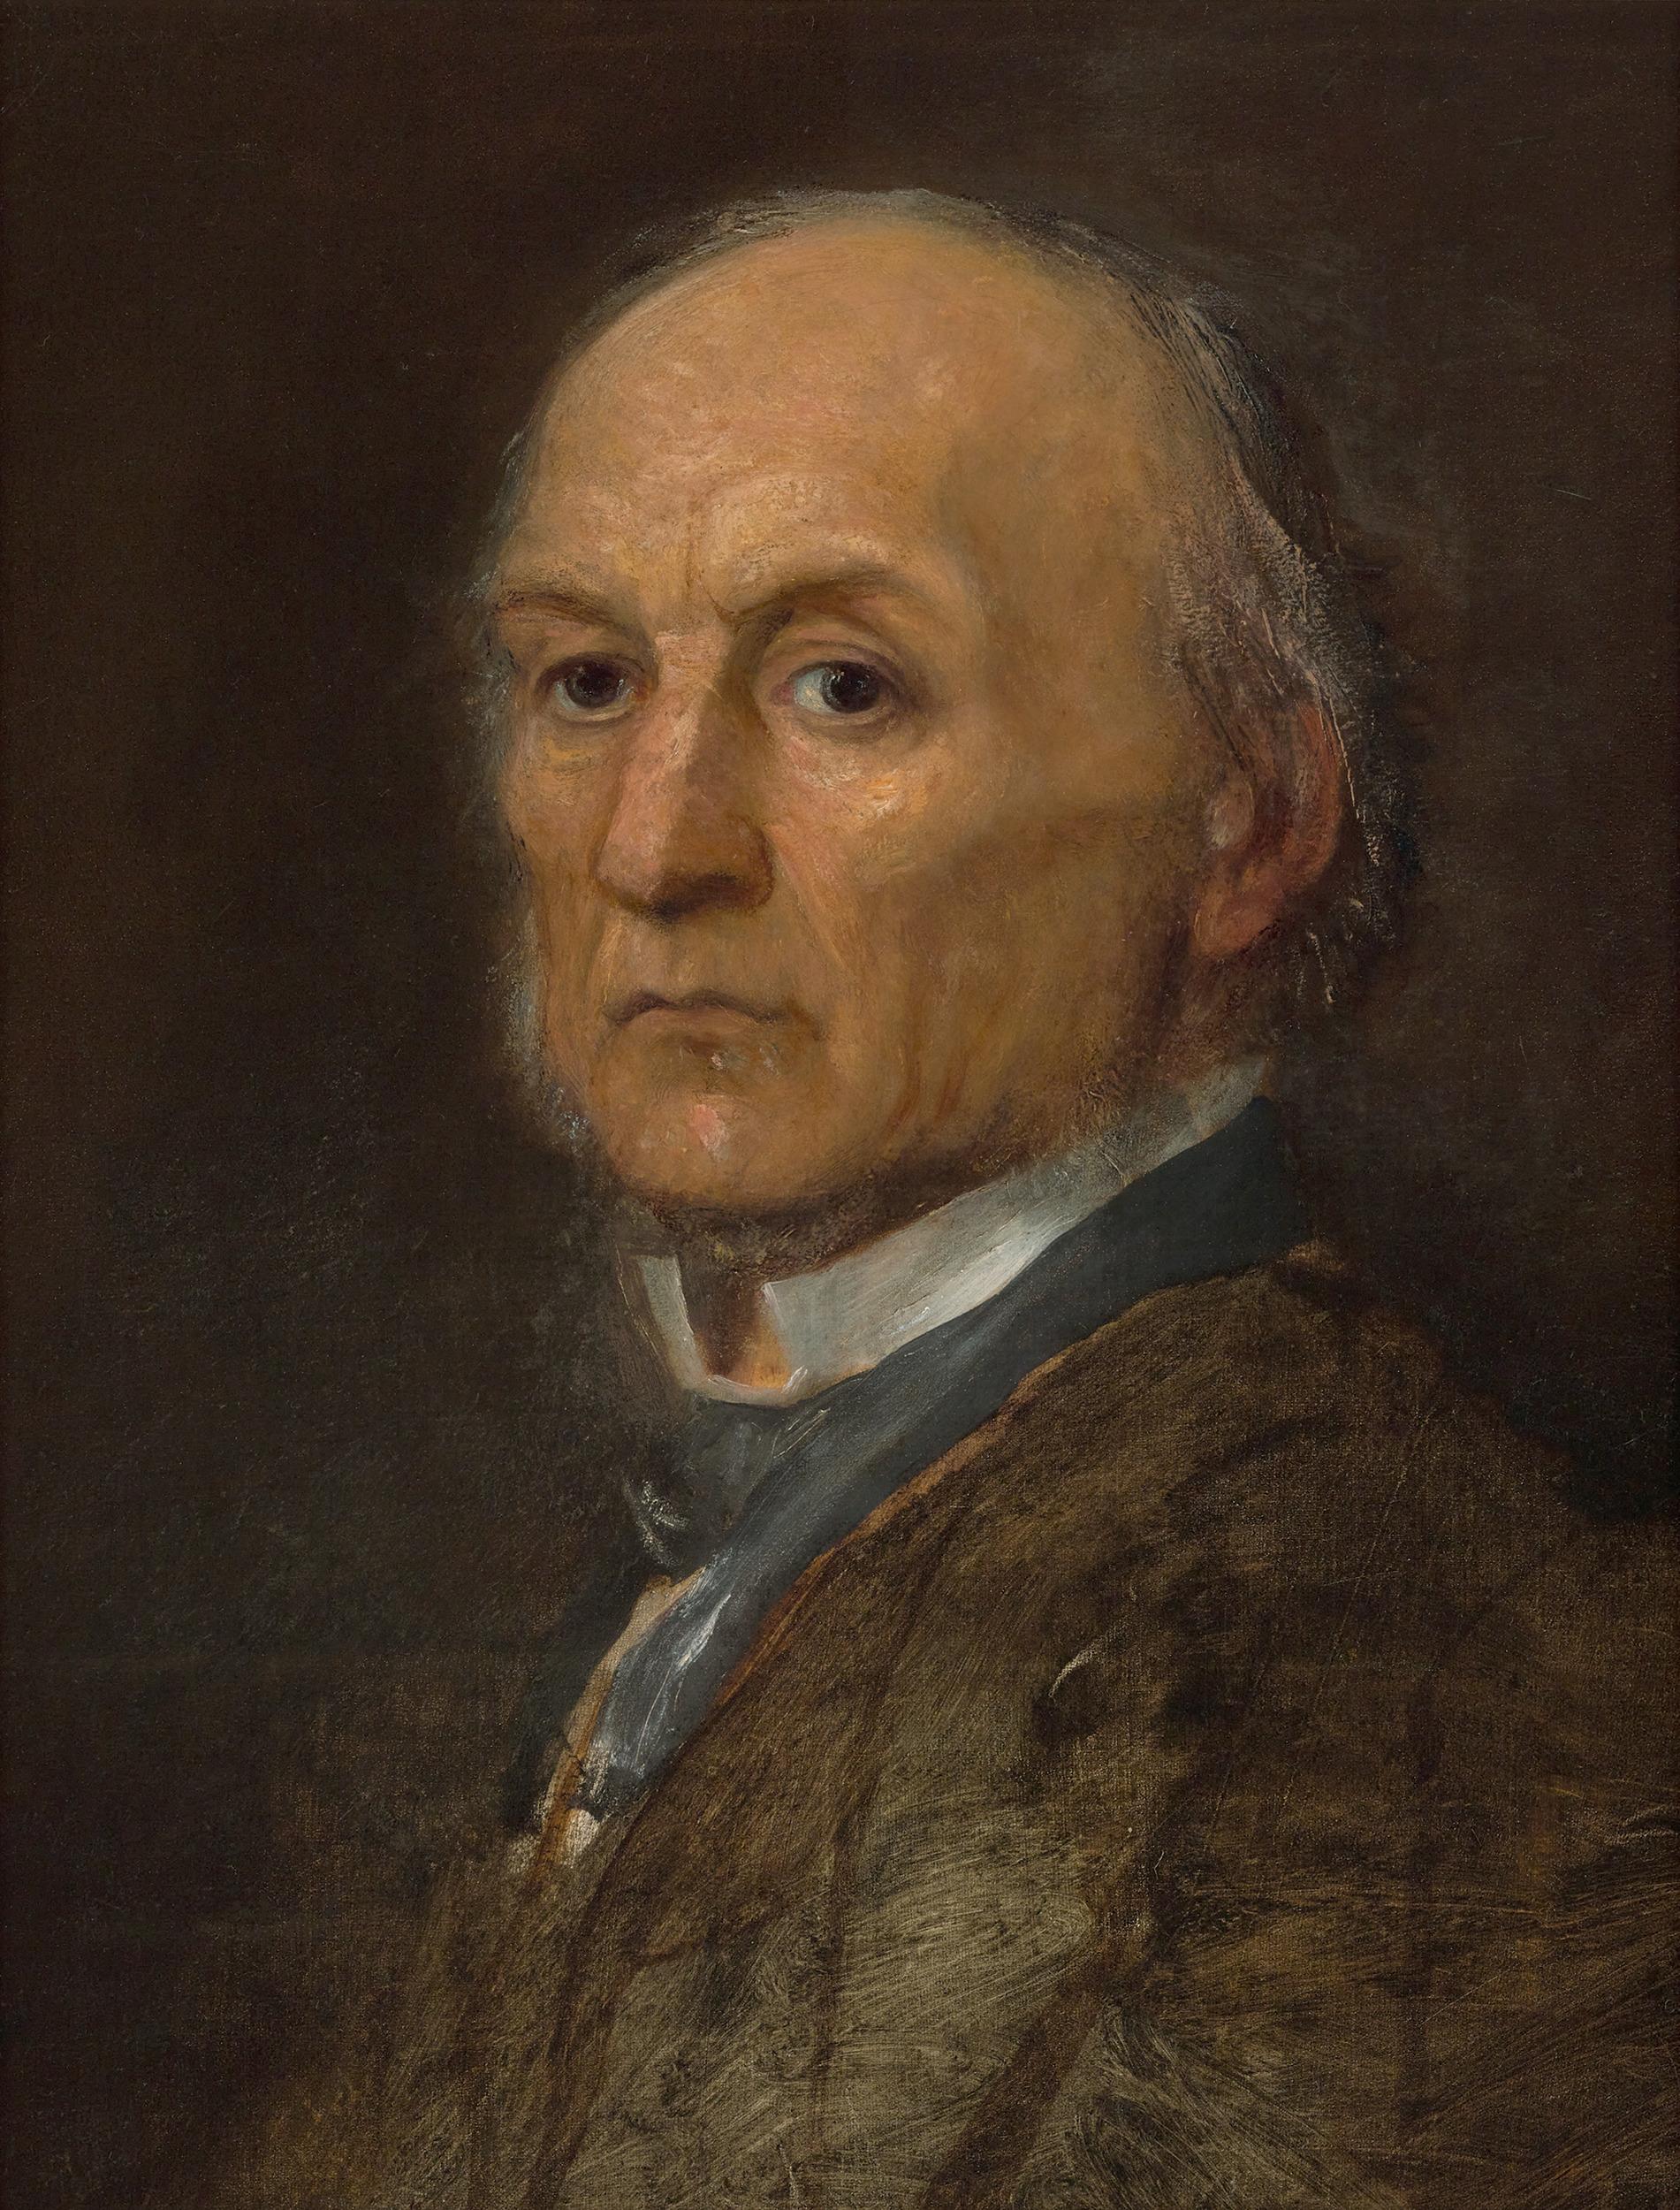 Portrait Painting George Frederic Watts OM RA - Portrait du Premier ministre William Ewart Gladstone par George Frederic Watts